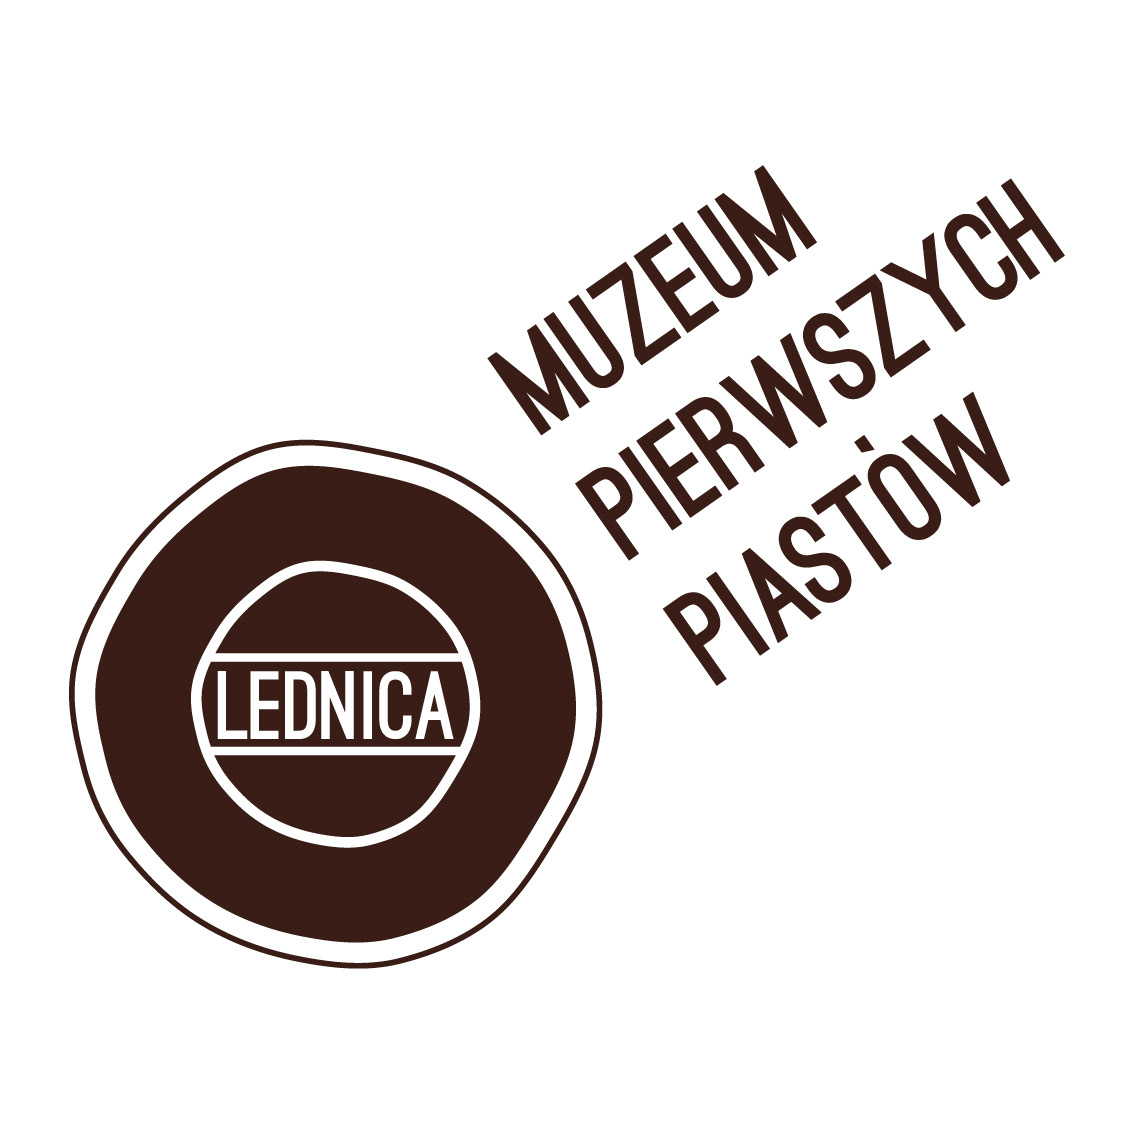 museum  poland  Polish  design  brand  printing  dossier  Merchandising  clothing  corporate  Corporative